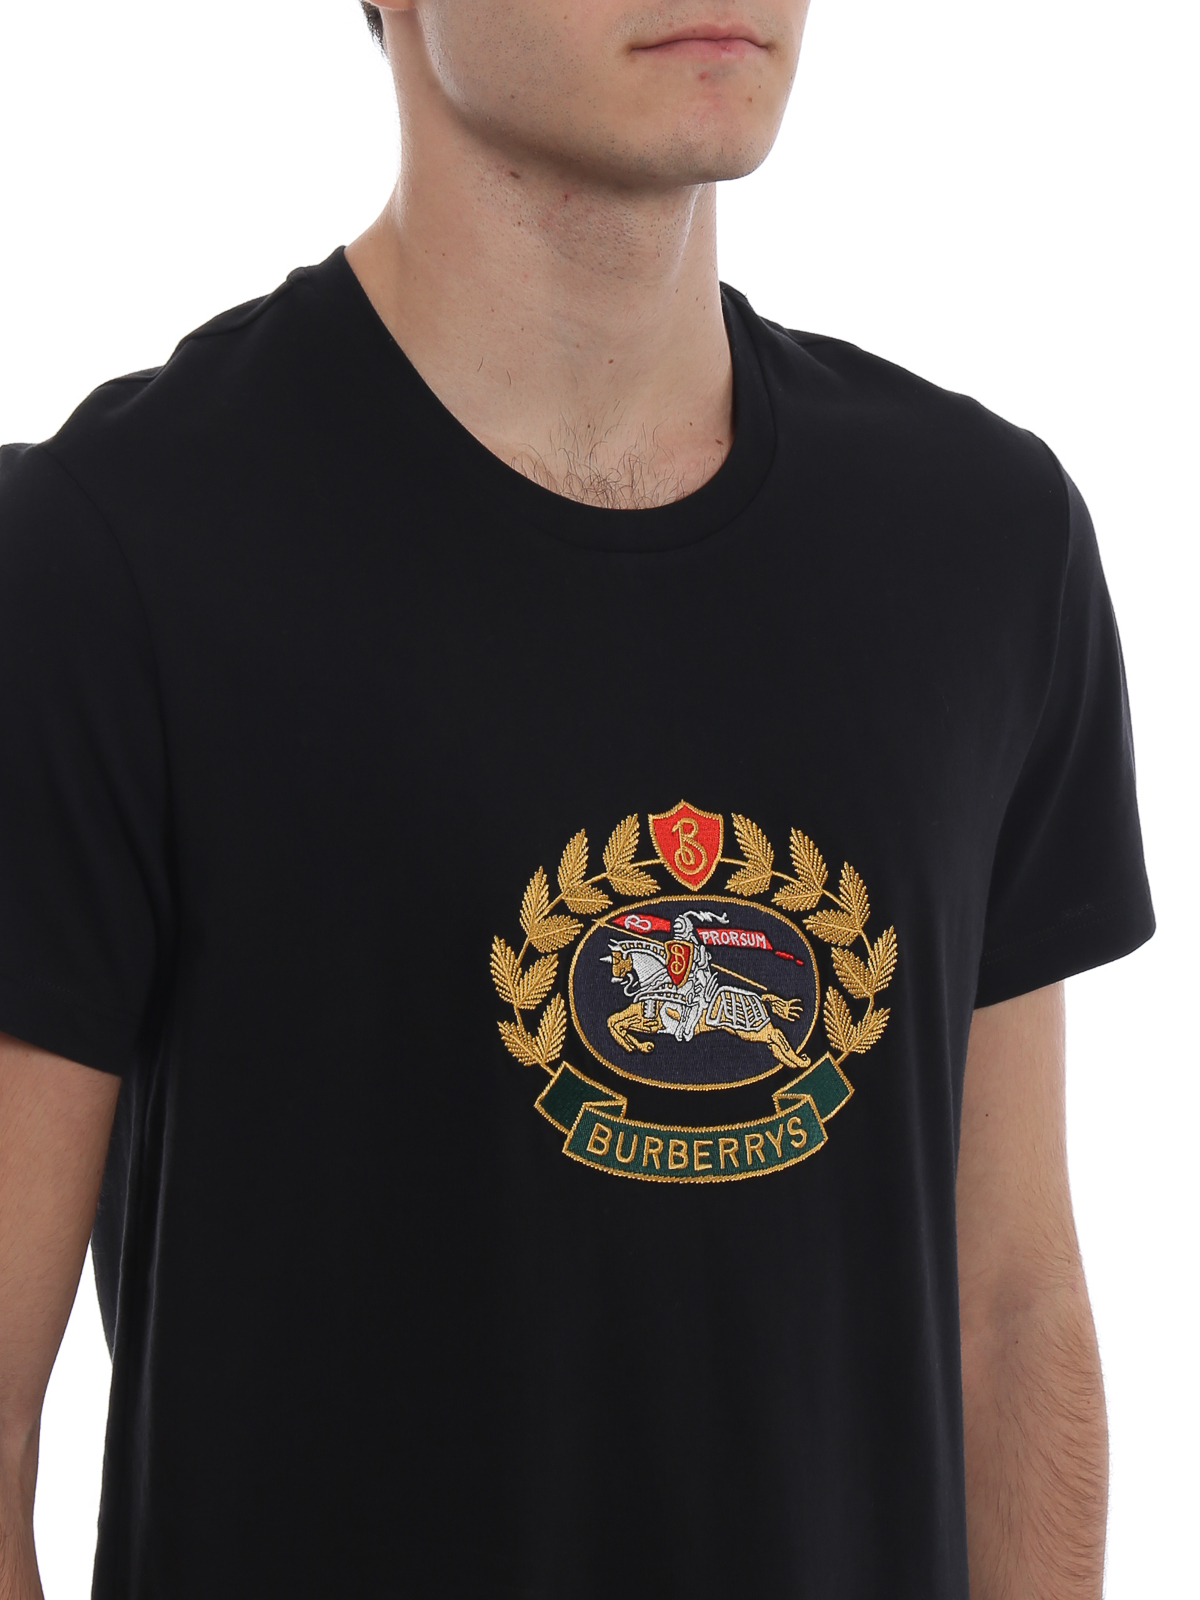 burberry t shirt logo